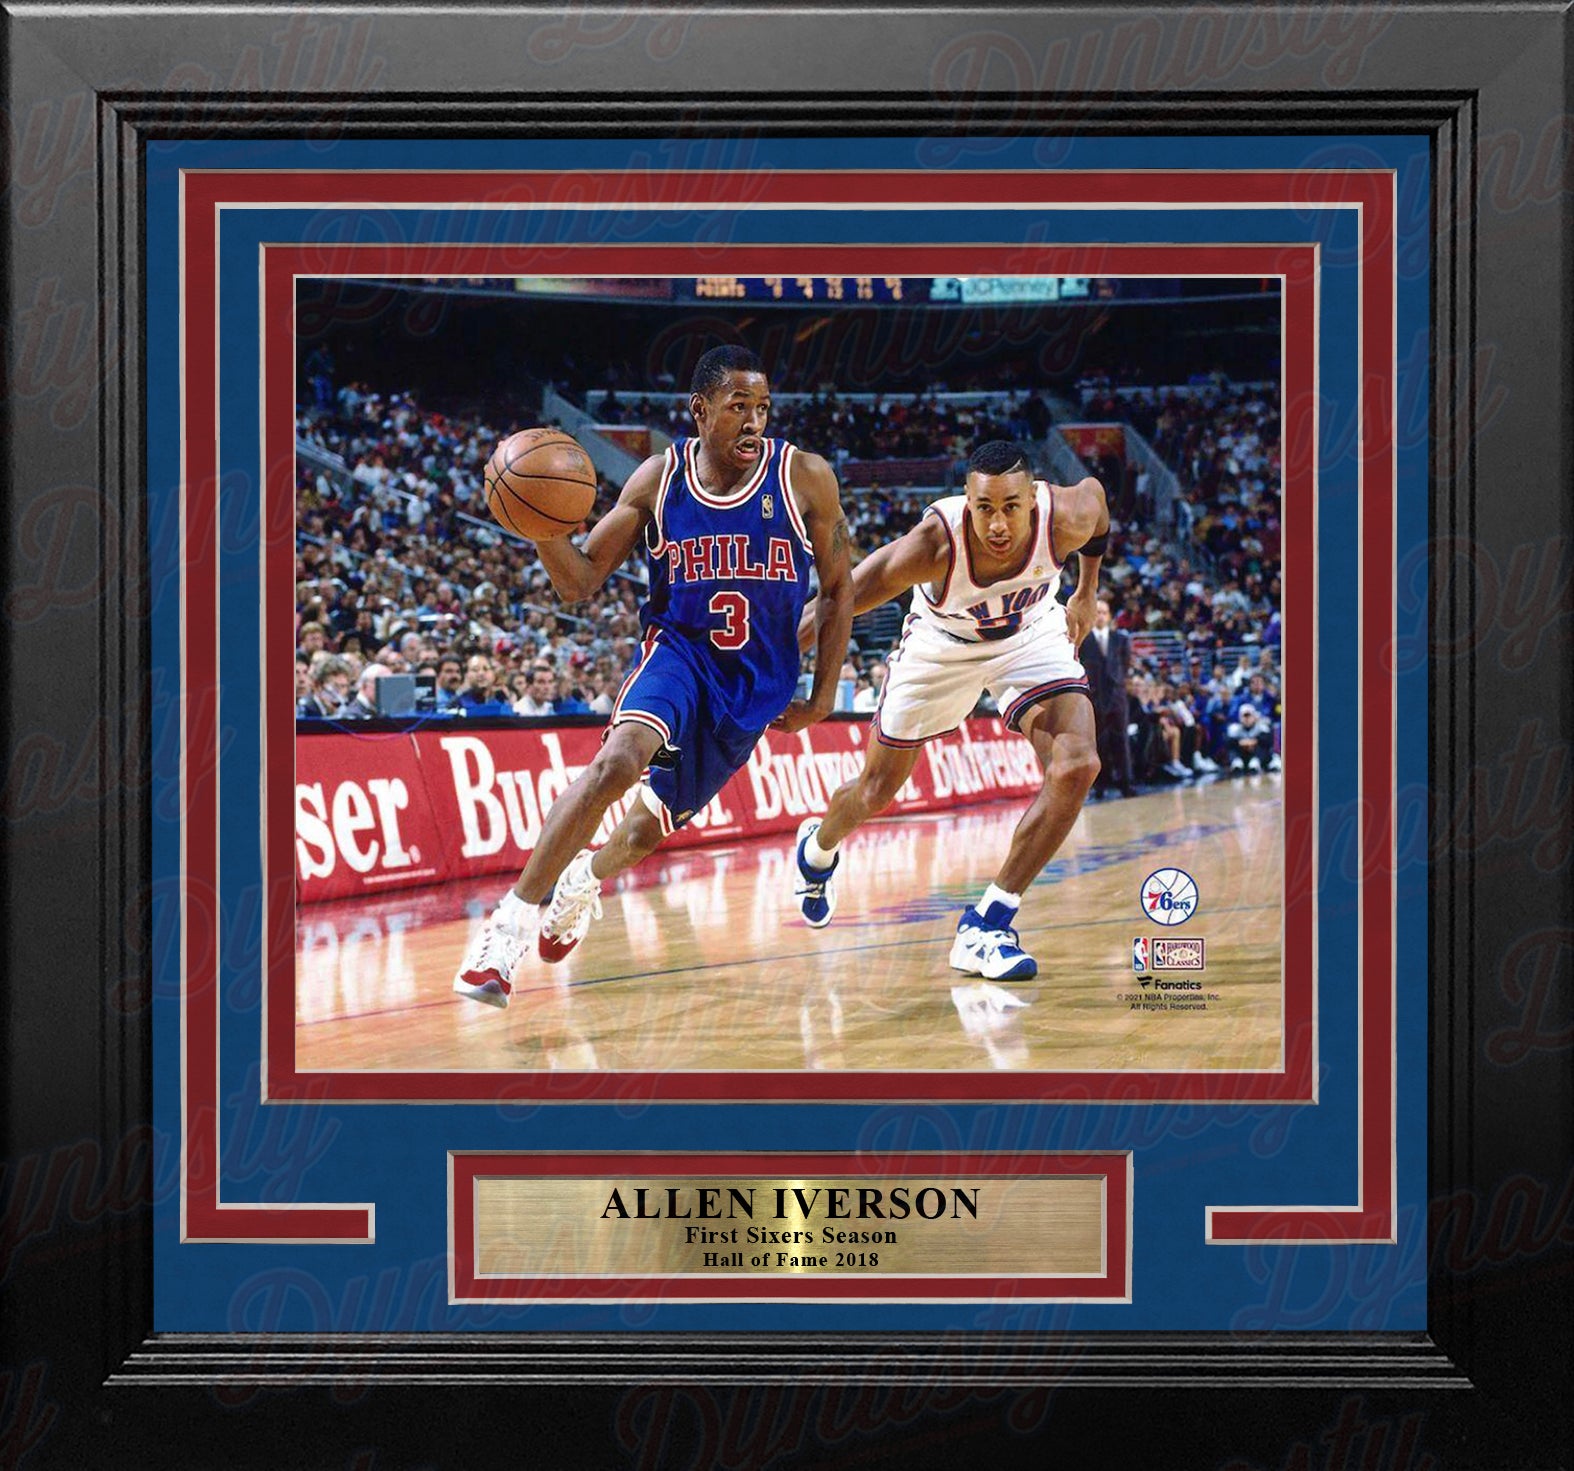 Allen Iverson in Action Philadelphia 76ers 8 x 10 Framed Basketball Photo  - Dynasty Sports & Framing